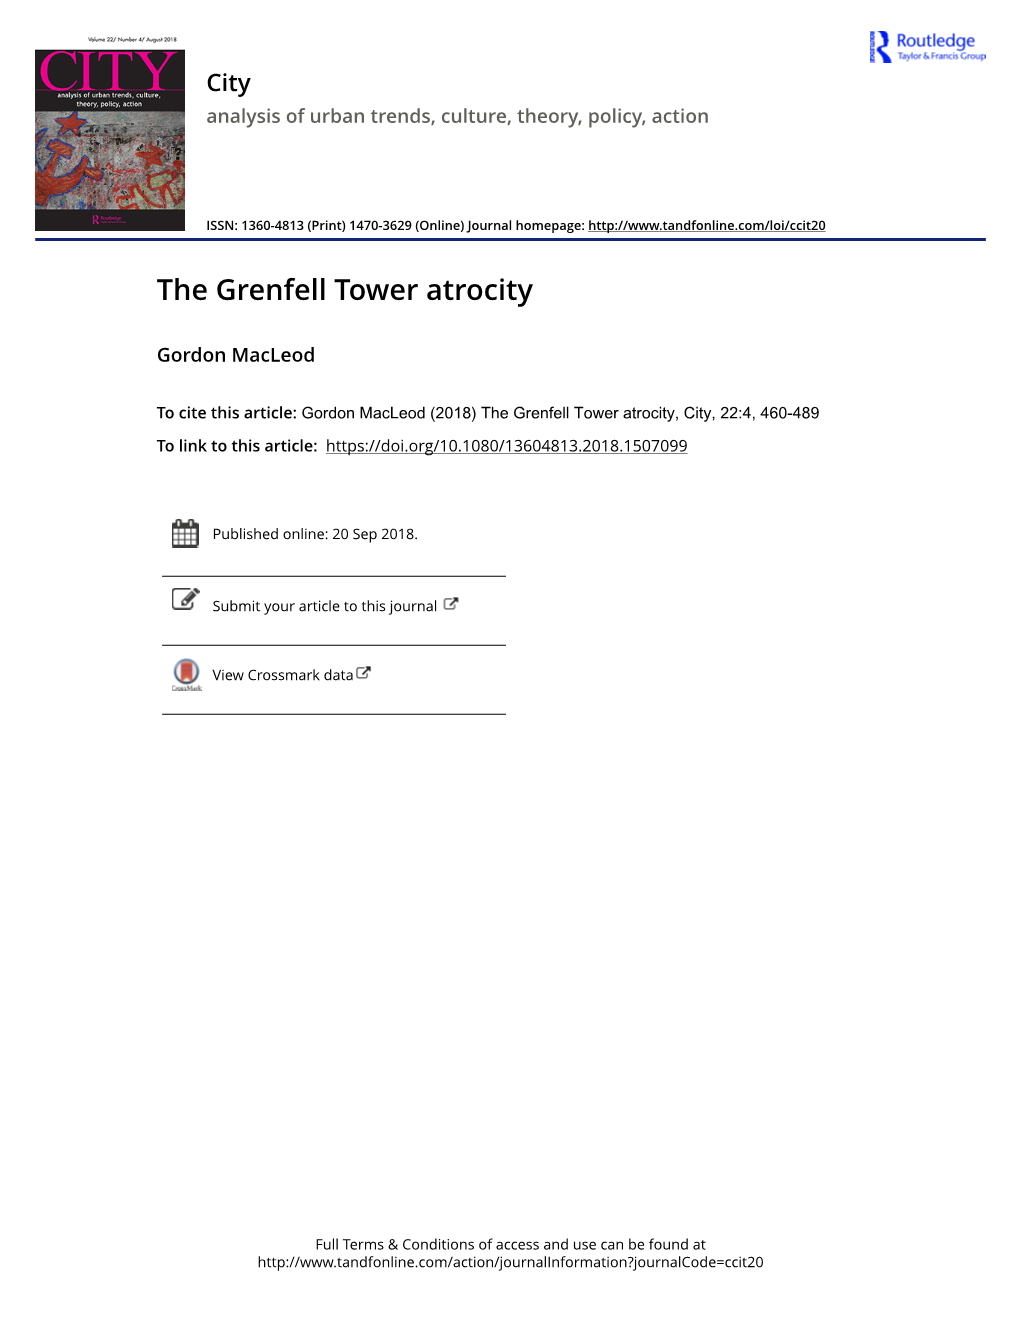 Macleod 2018 CITY Grenfell Tower Atrocity